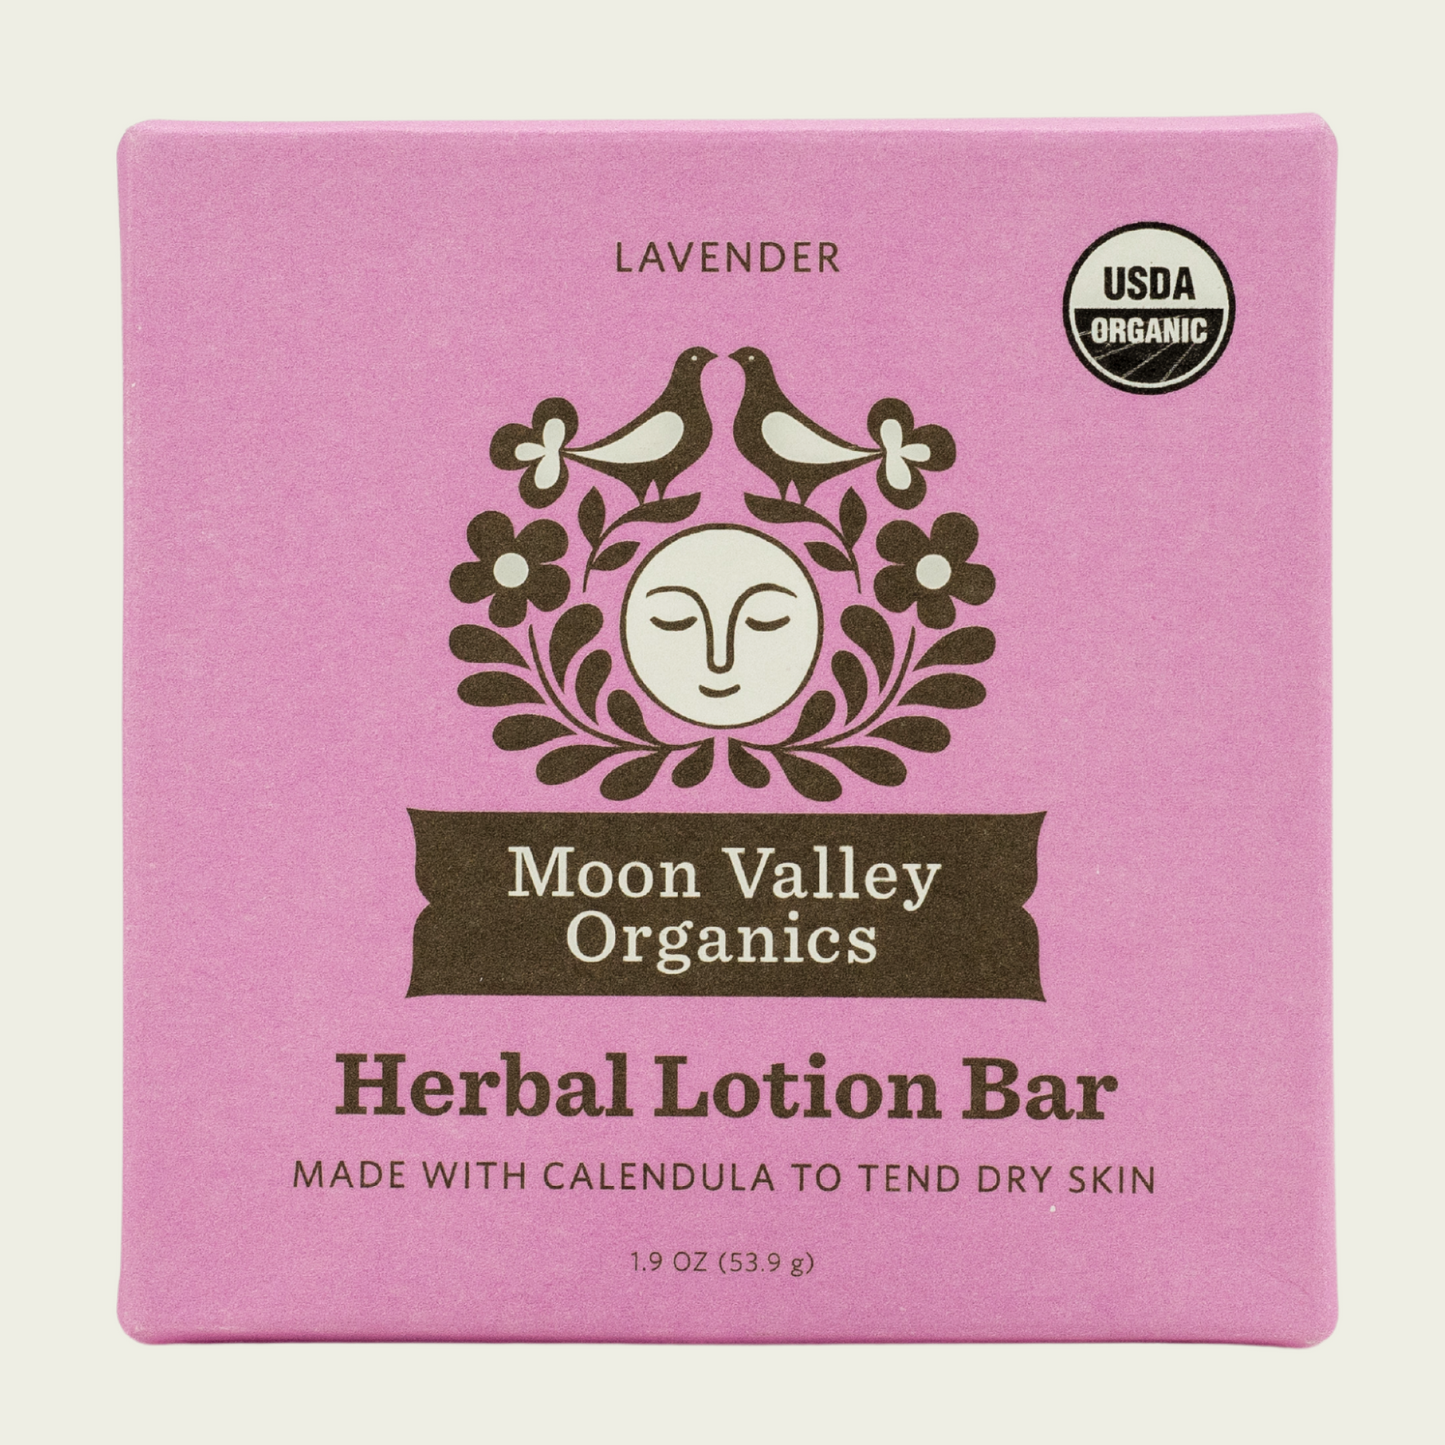 Moon Valley Organics Herbal Lotion Bar Lavender Front Box